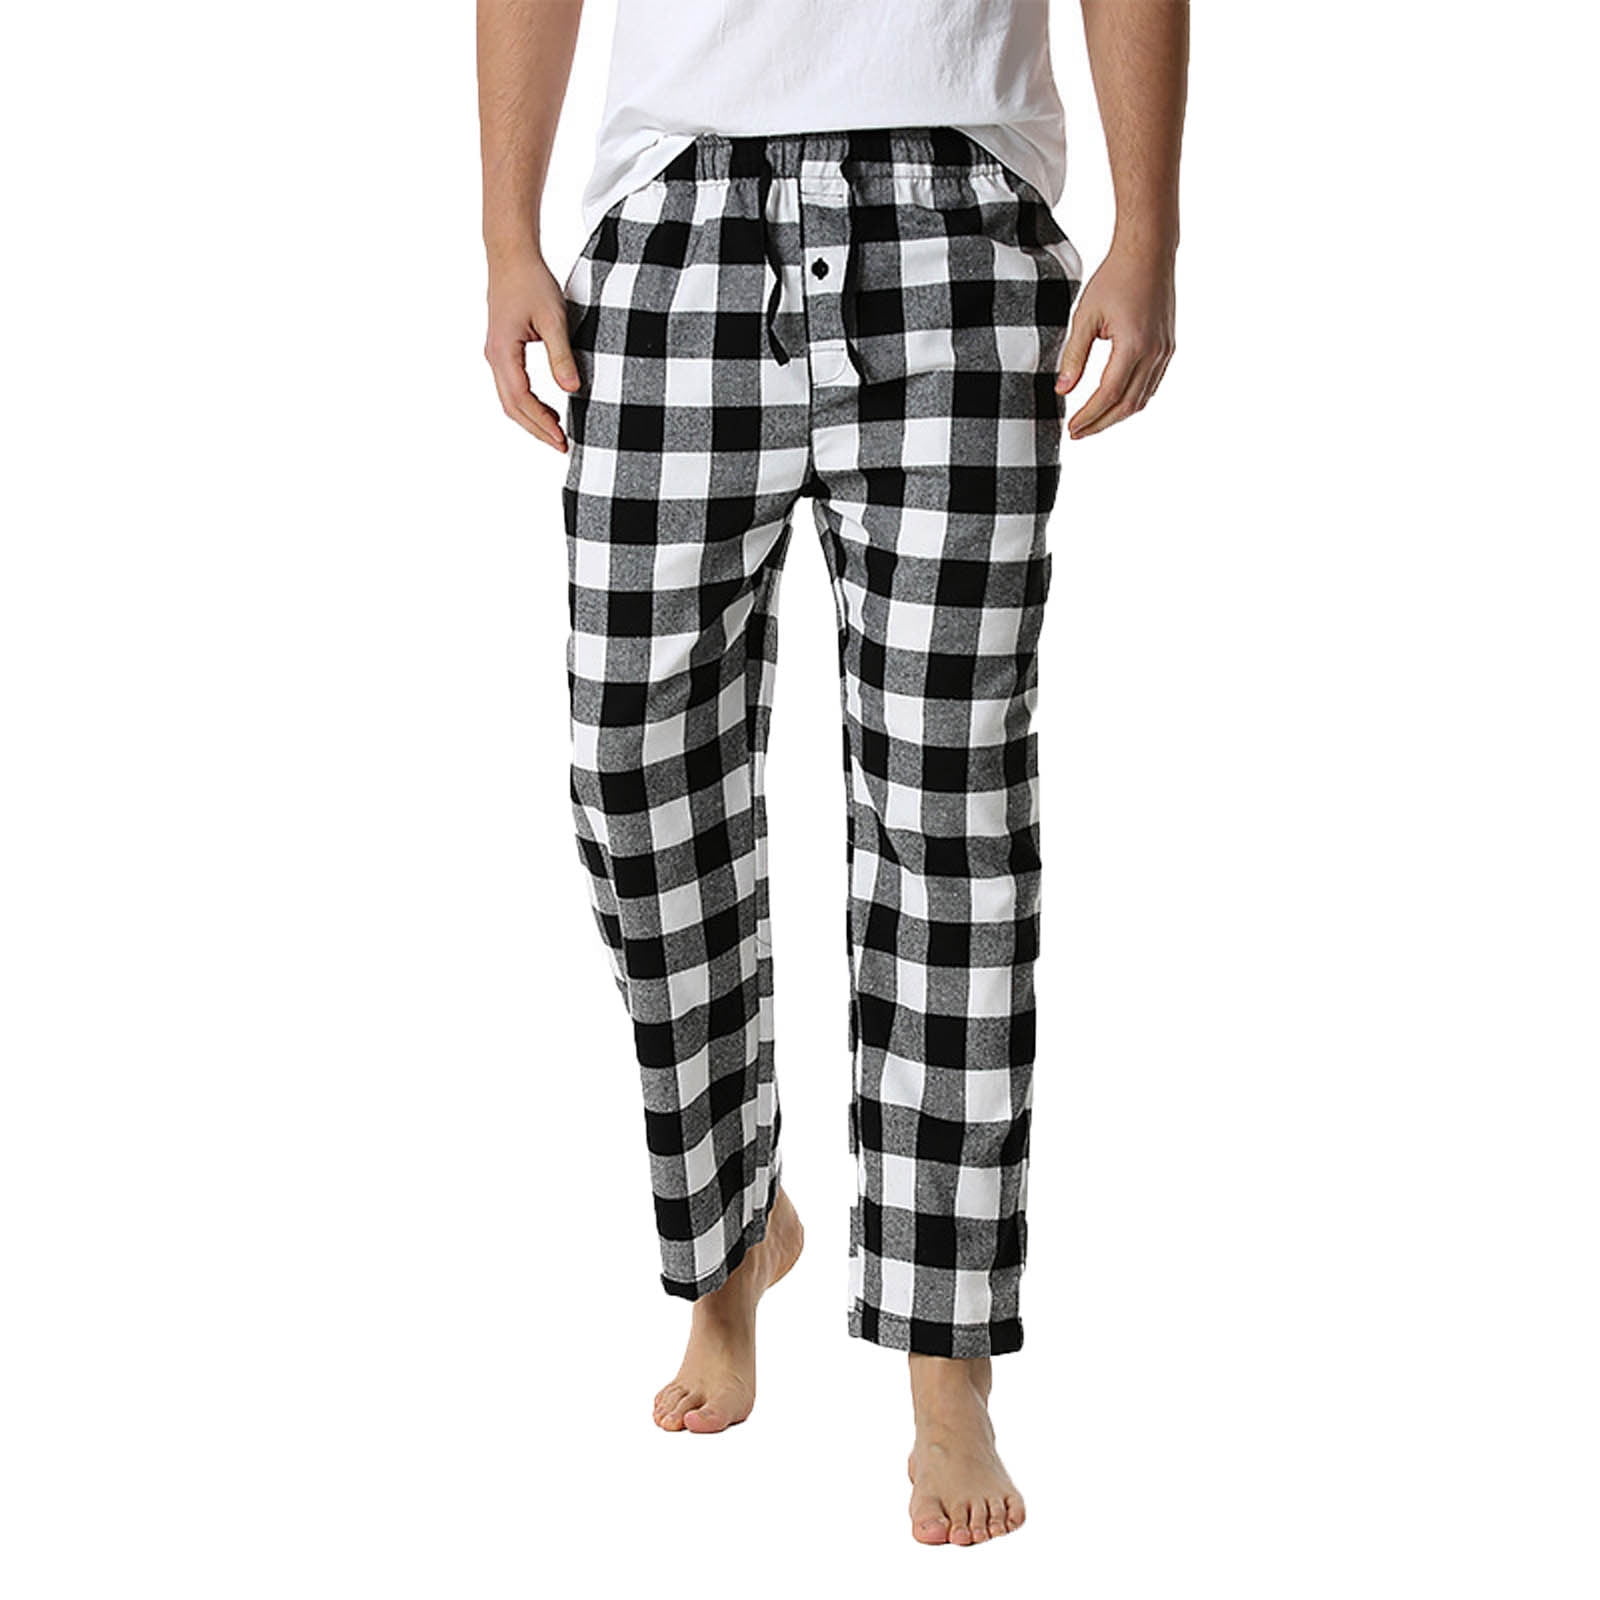 Clearance Pajama Pants for Men Men's Cotton Pajama Pants Plaid ...